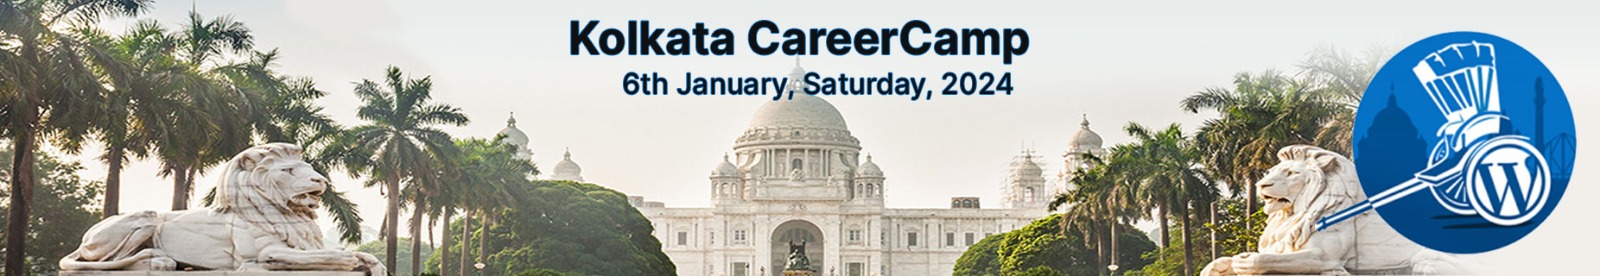 Kolkata CareerCamp